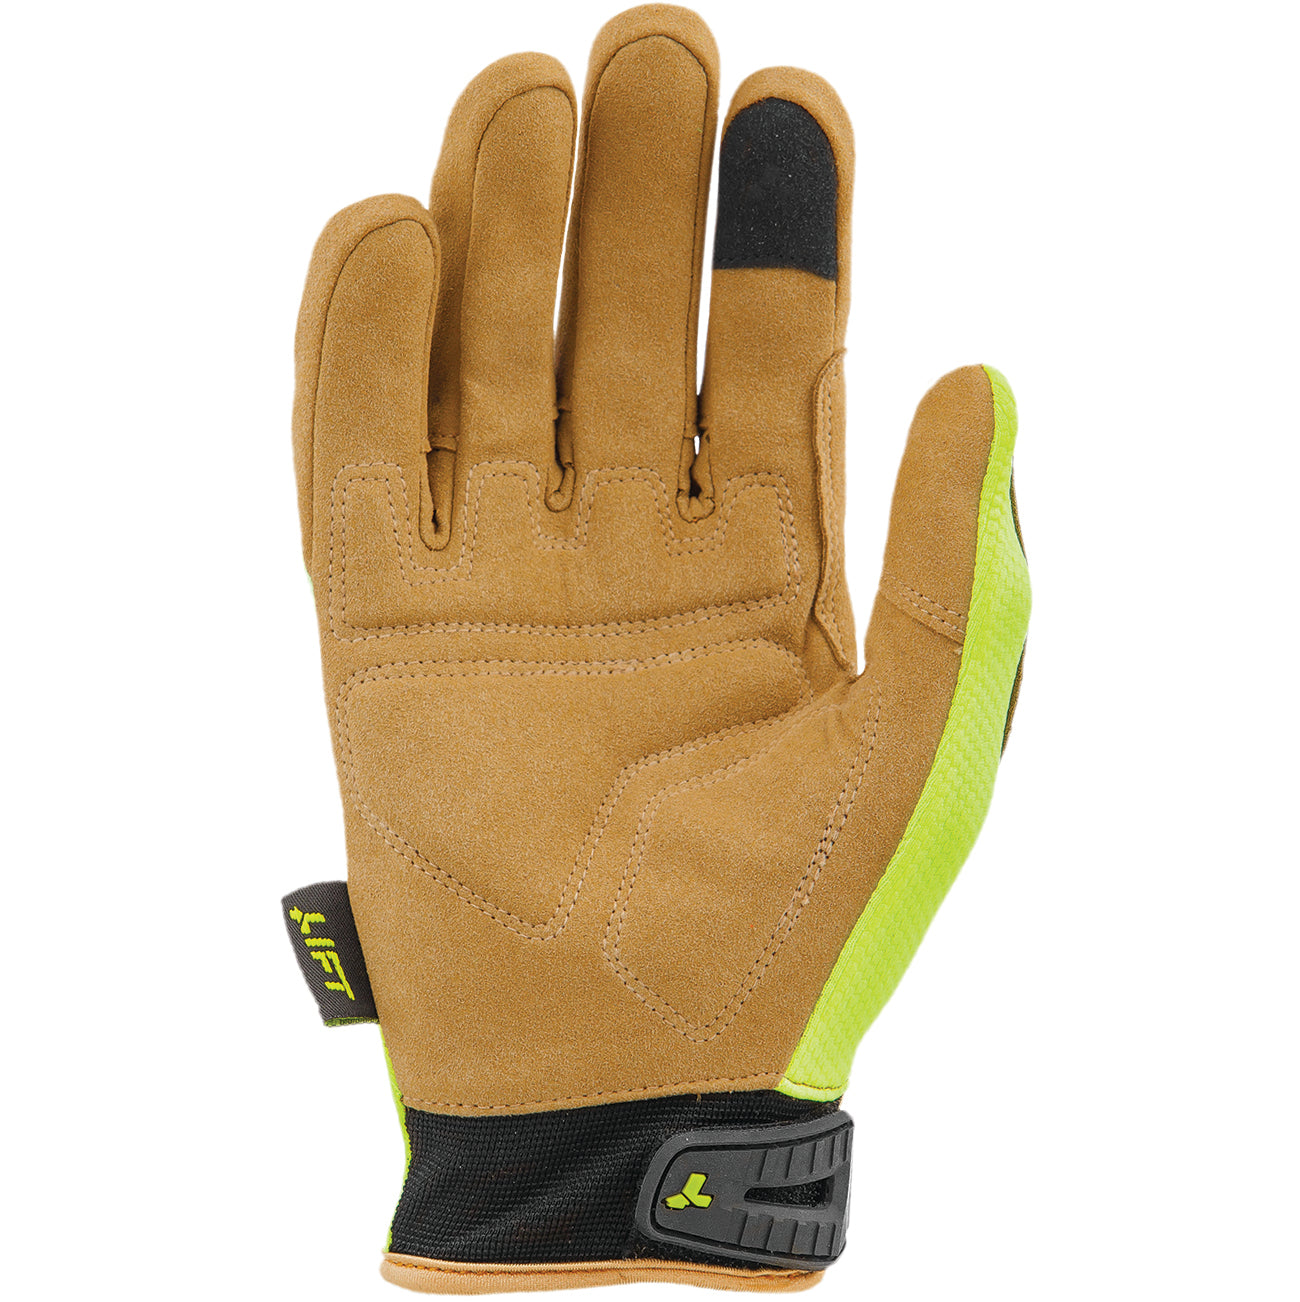 LIFT Safety - OPTION Winter Glove (Hi-Viz) with Thinsulate